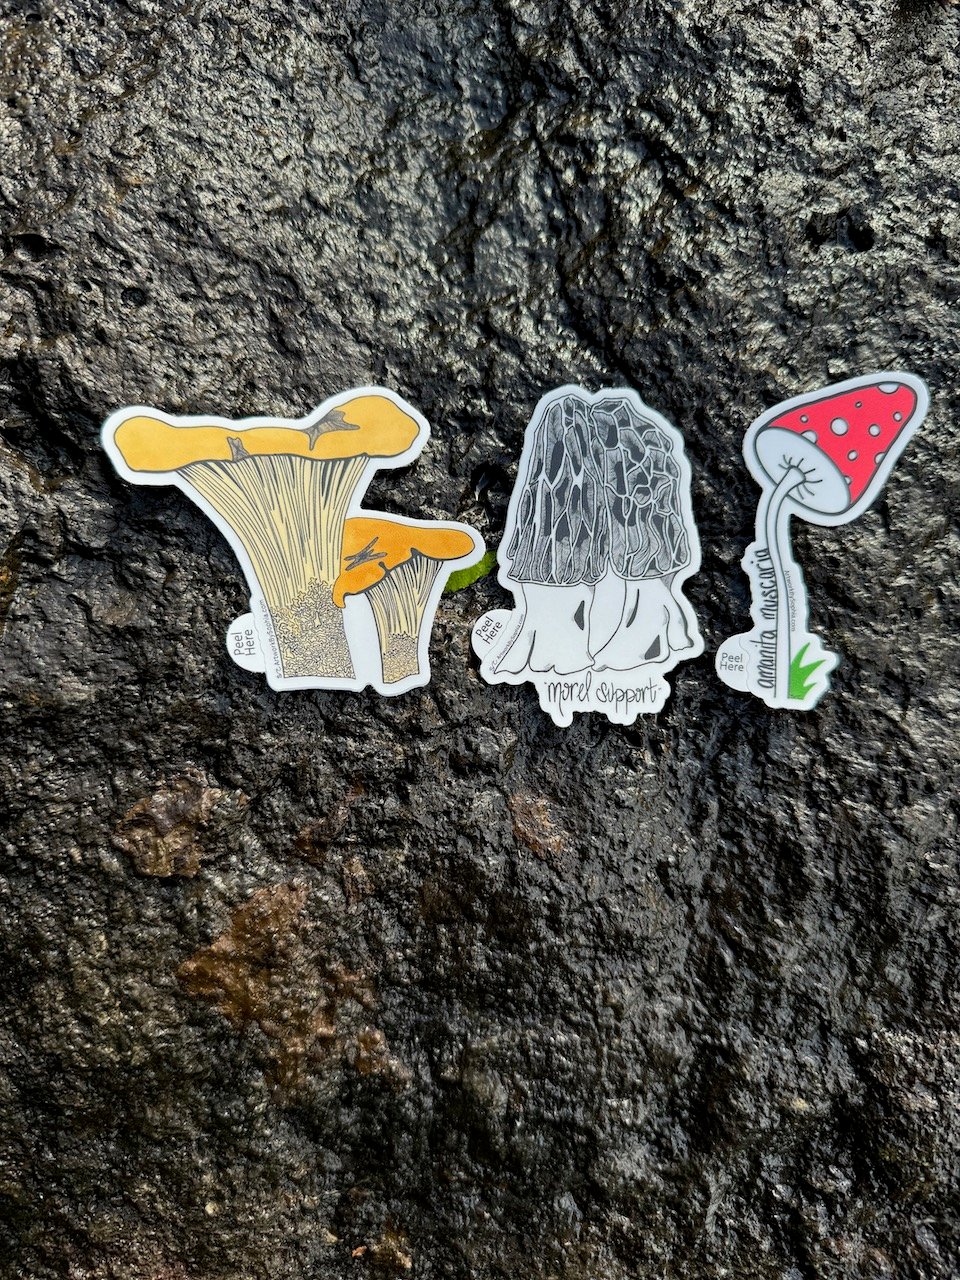 dalmatian sticker-collecting book – medium mushroom